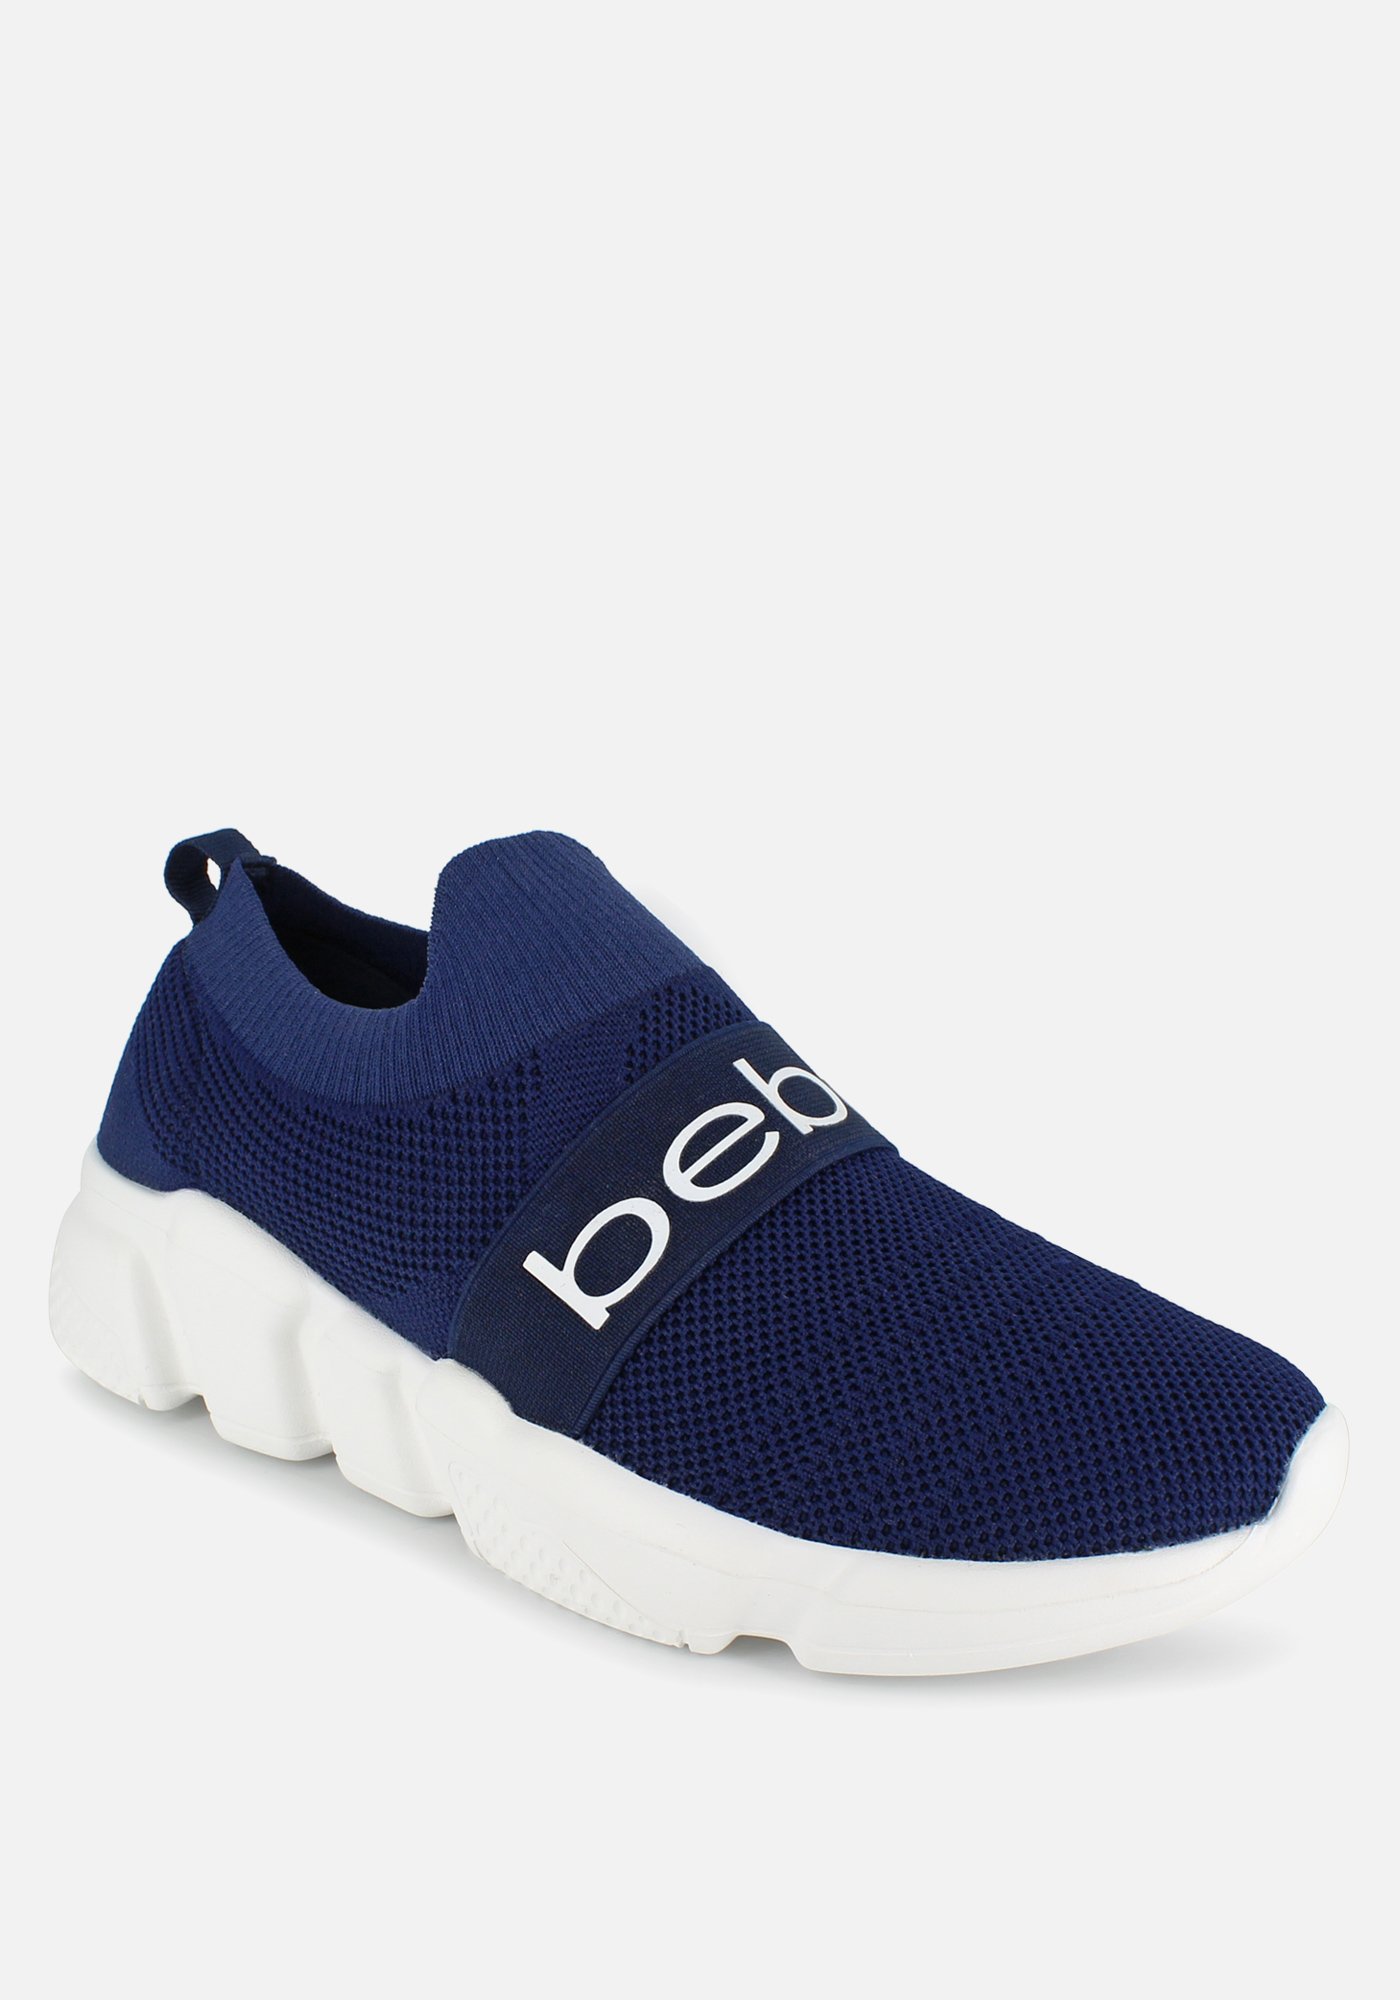 Bebe Women's Aindrea Platform Sneakers, Size 7 in Navy Blue Synthetic